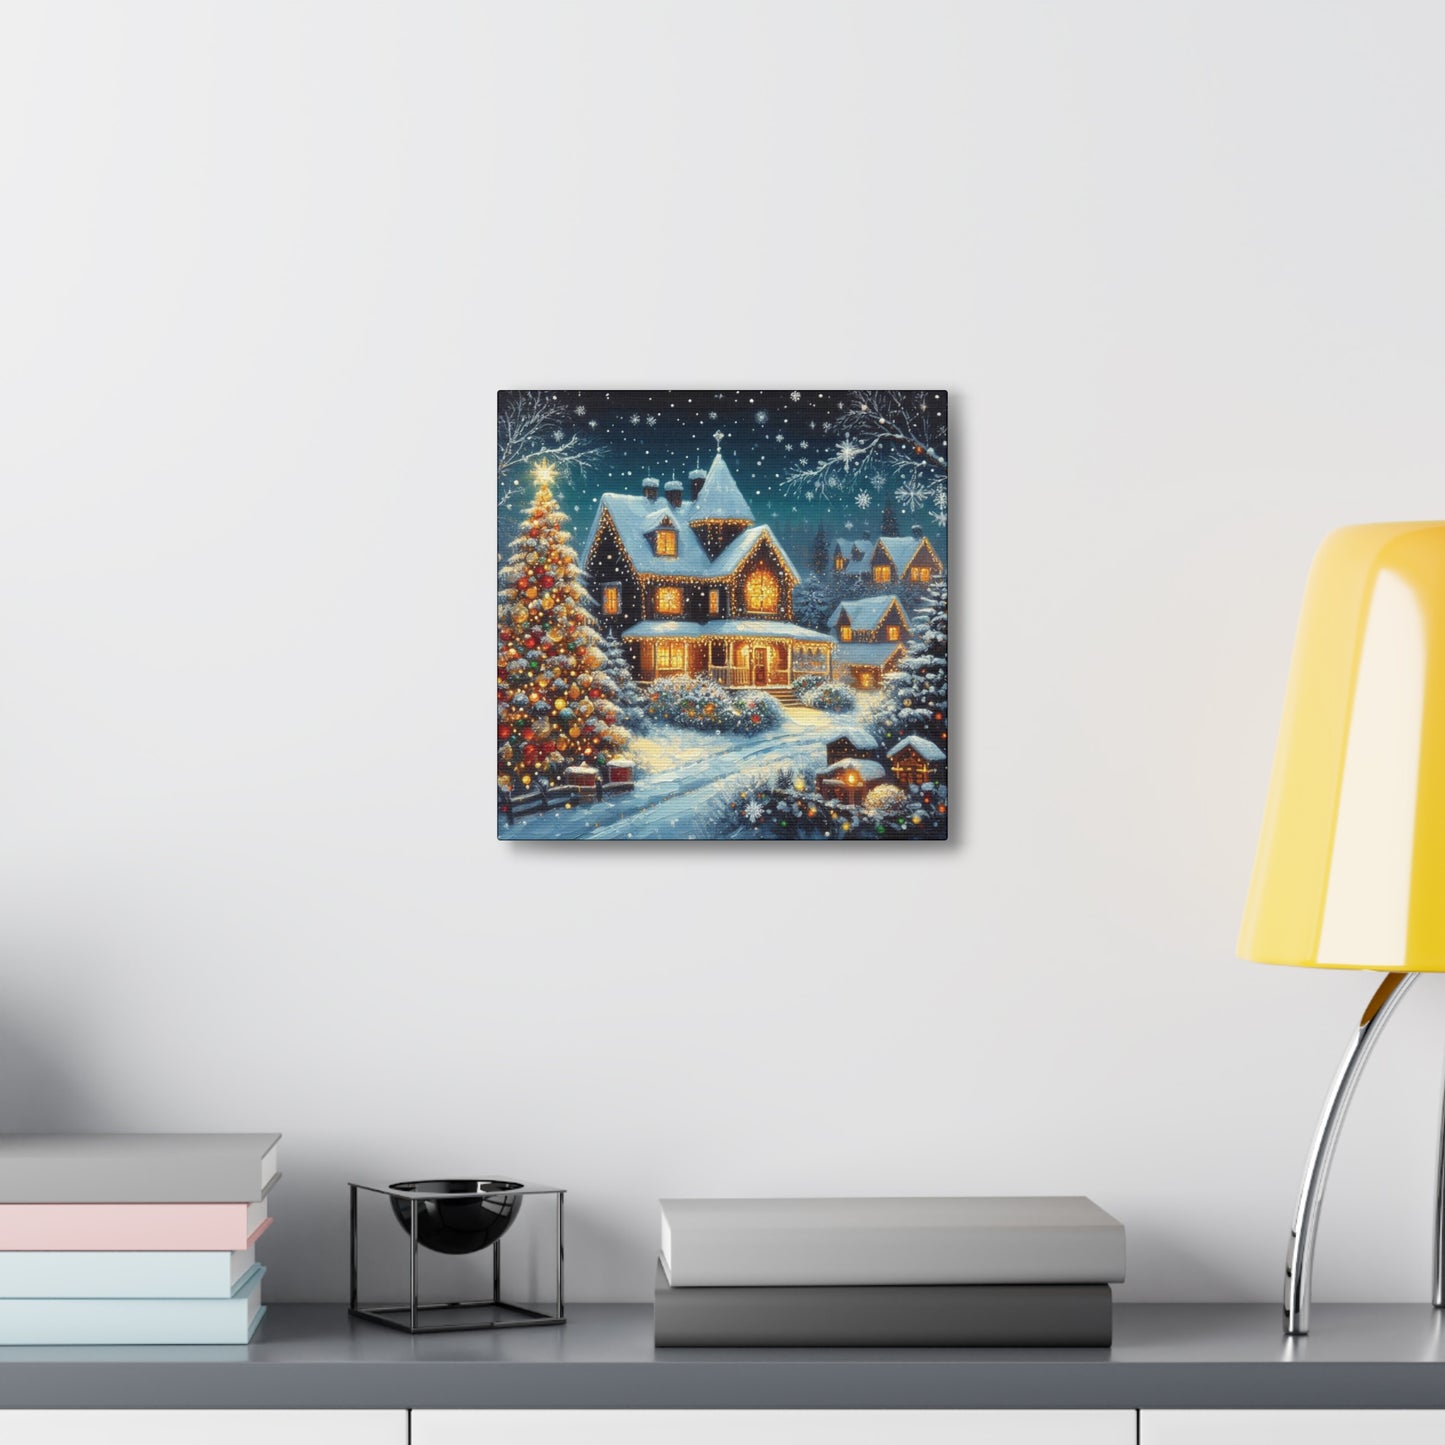 Christmas Wall Art for the Livingroom - Canvas Wall Art Deals. Noel-themed Artwork